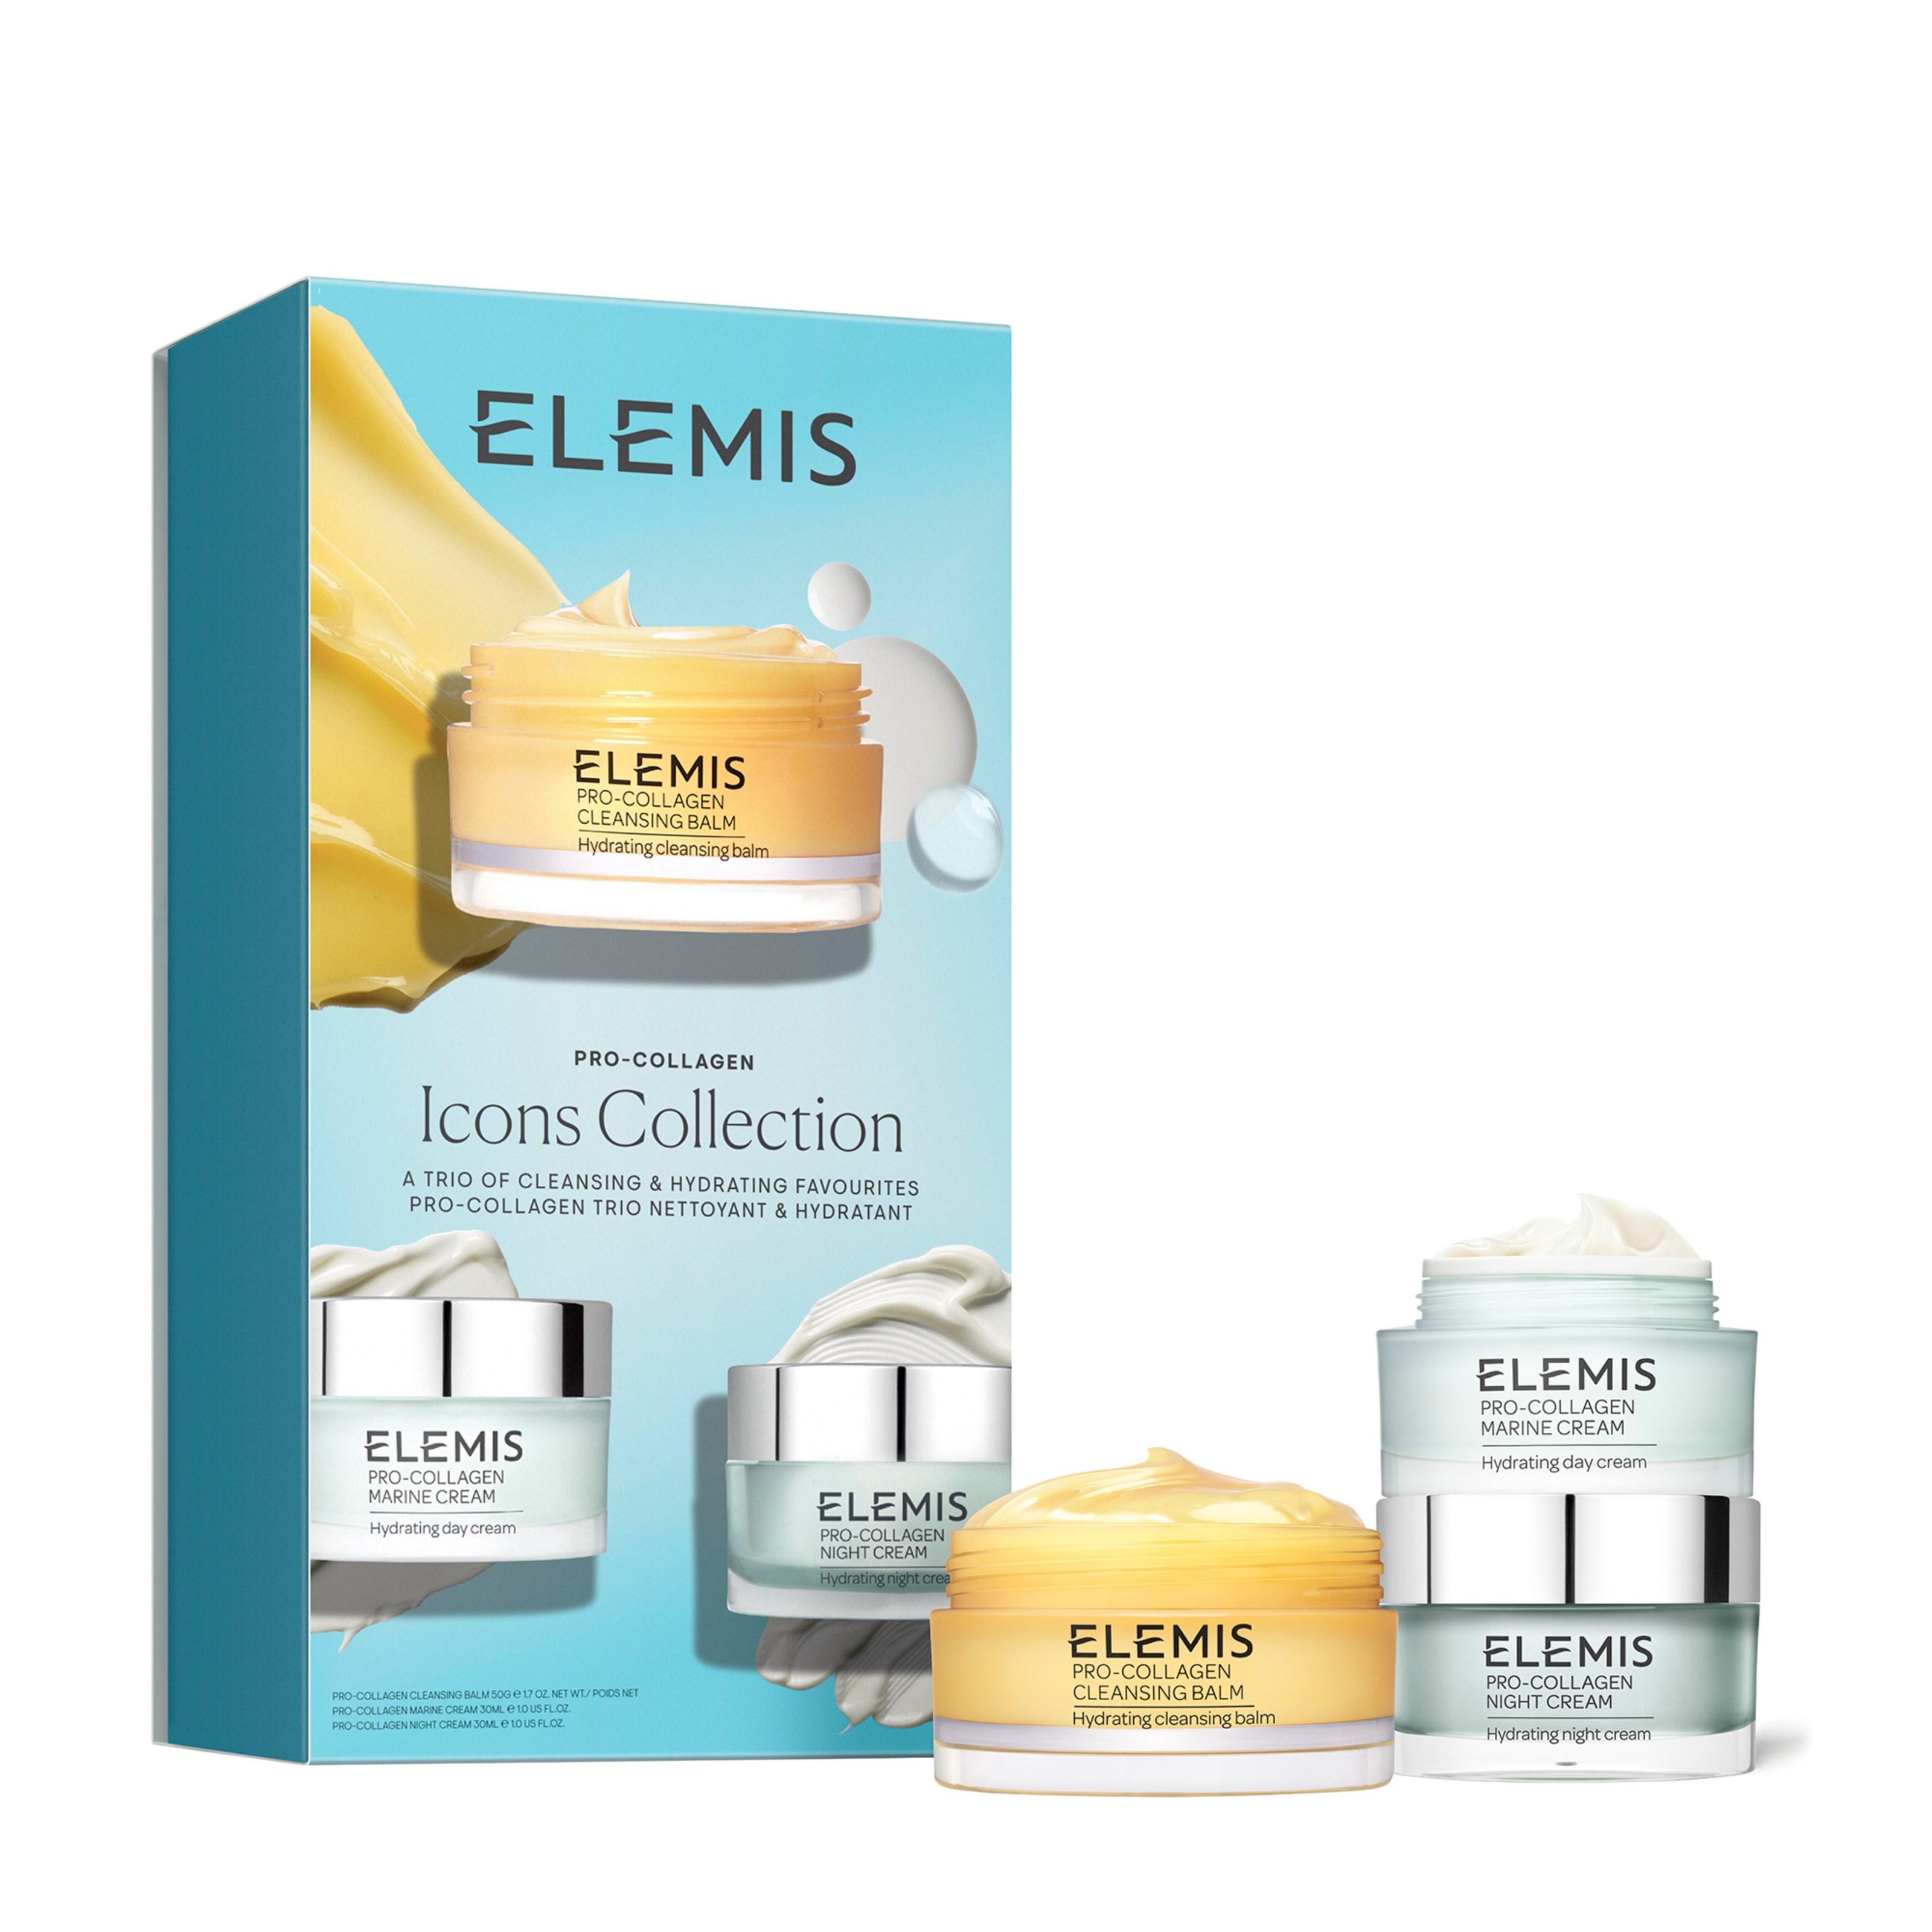 Läs mer om Elemis Pro-Collagen Icons Collection